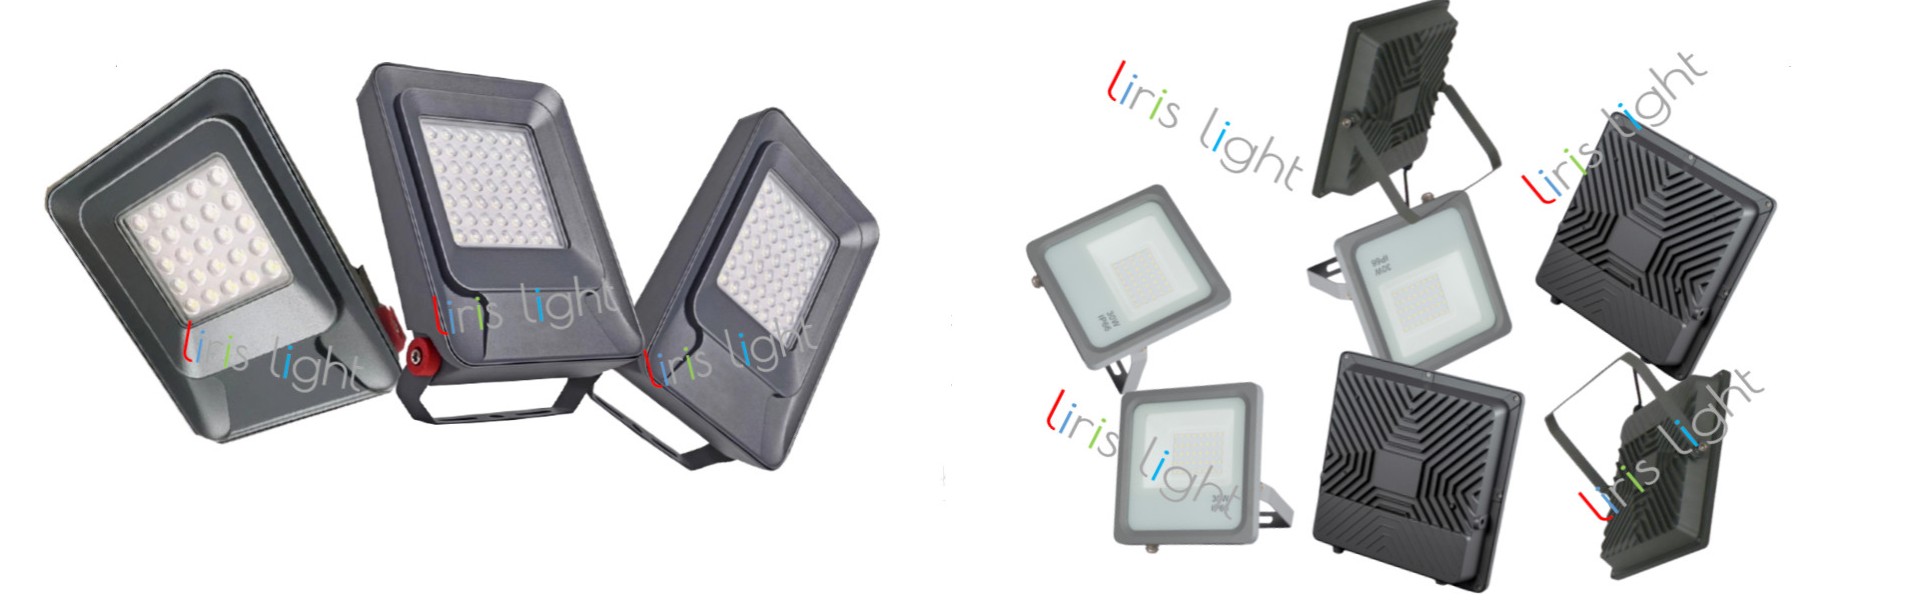 Liris(Hitop) Lighting Co., Ltd